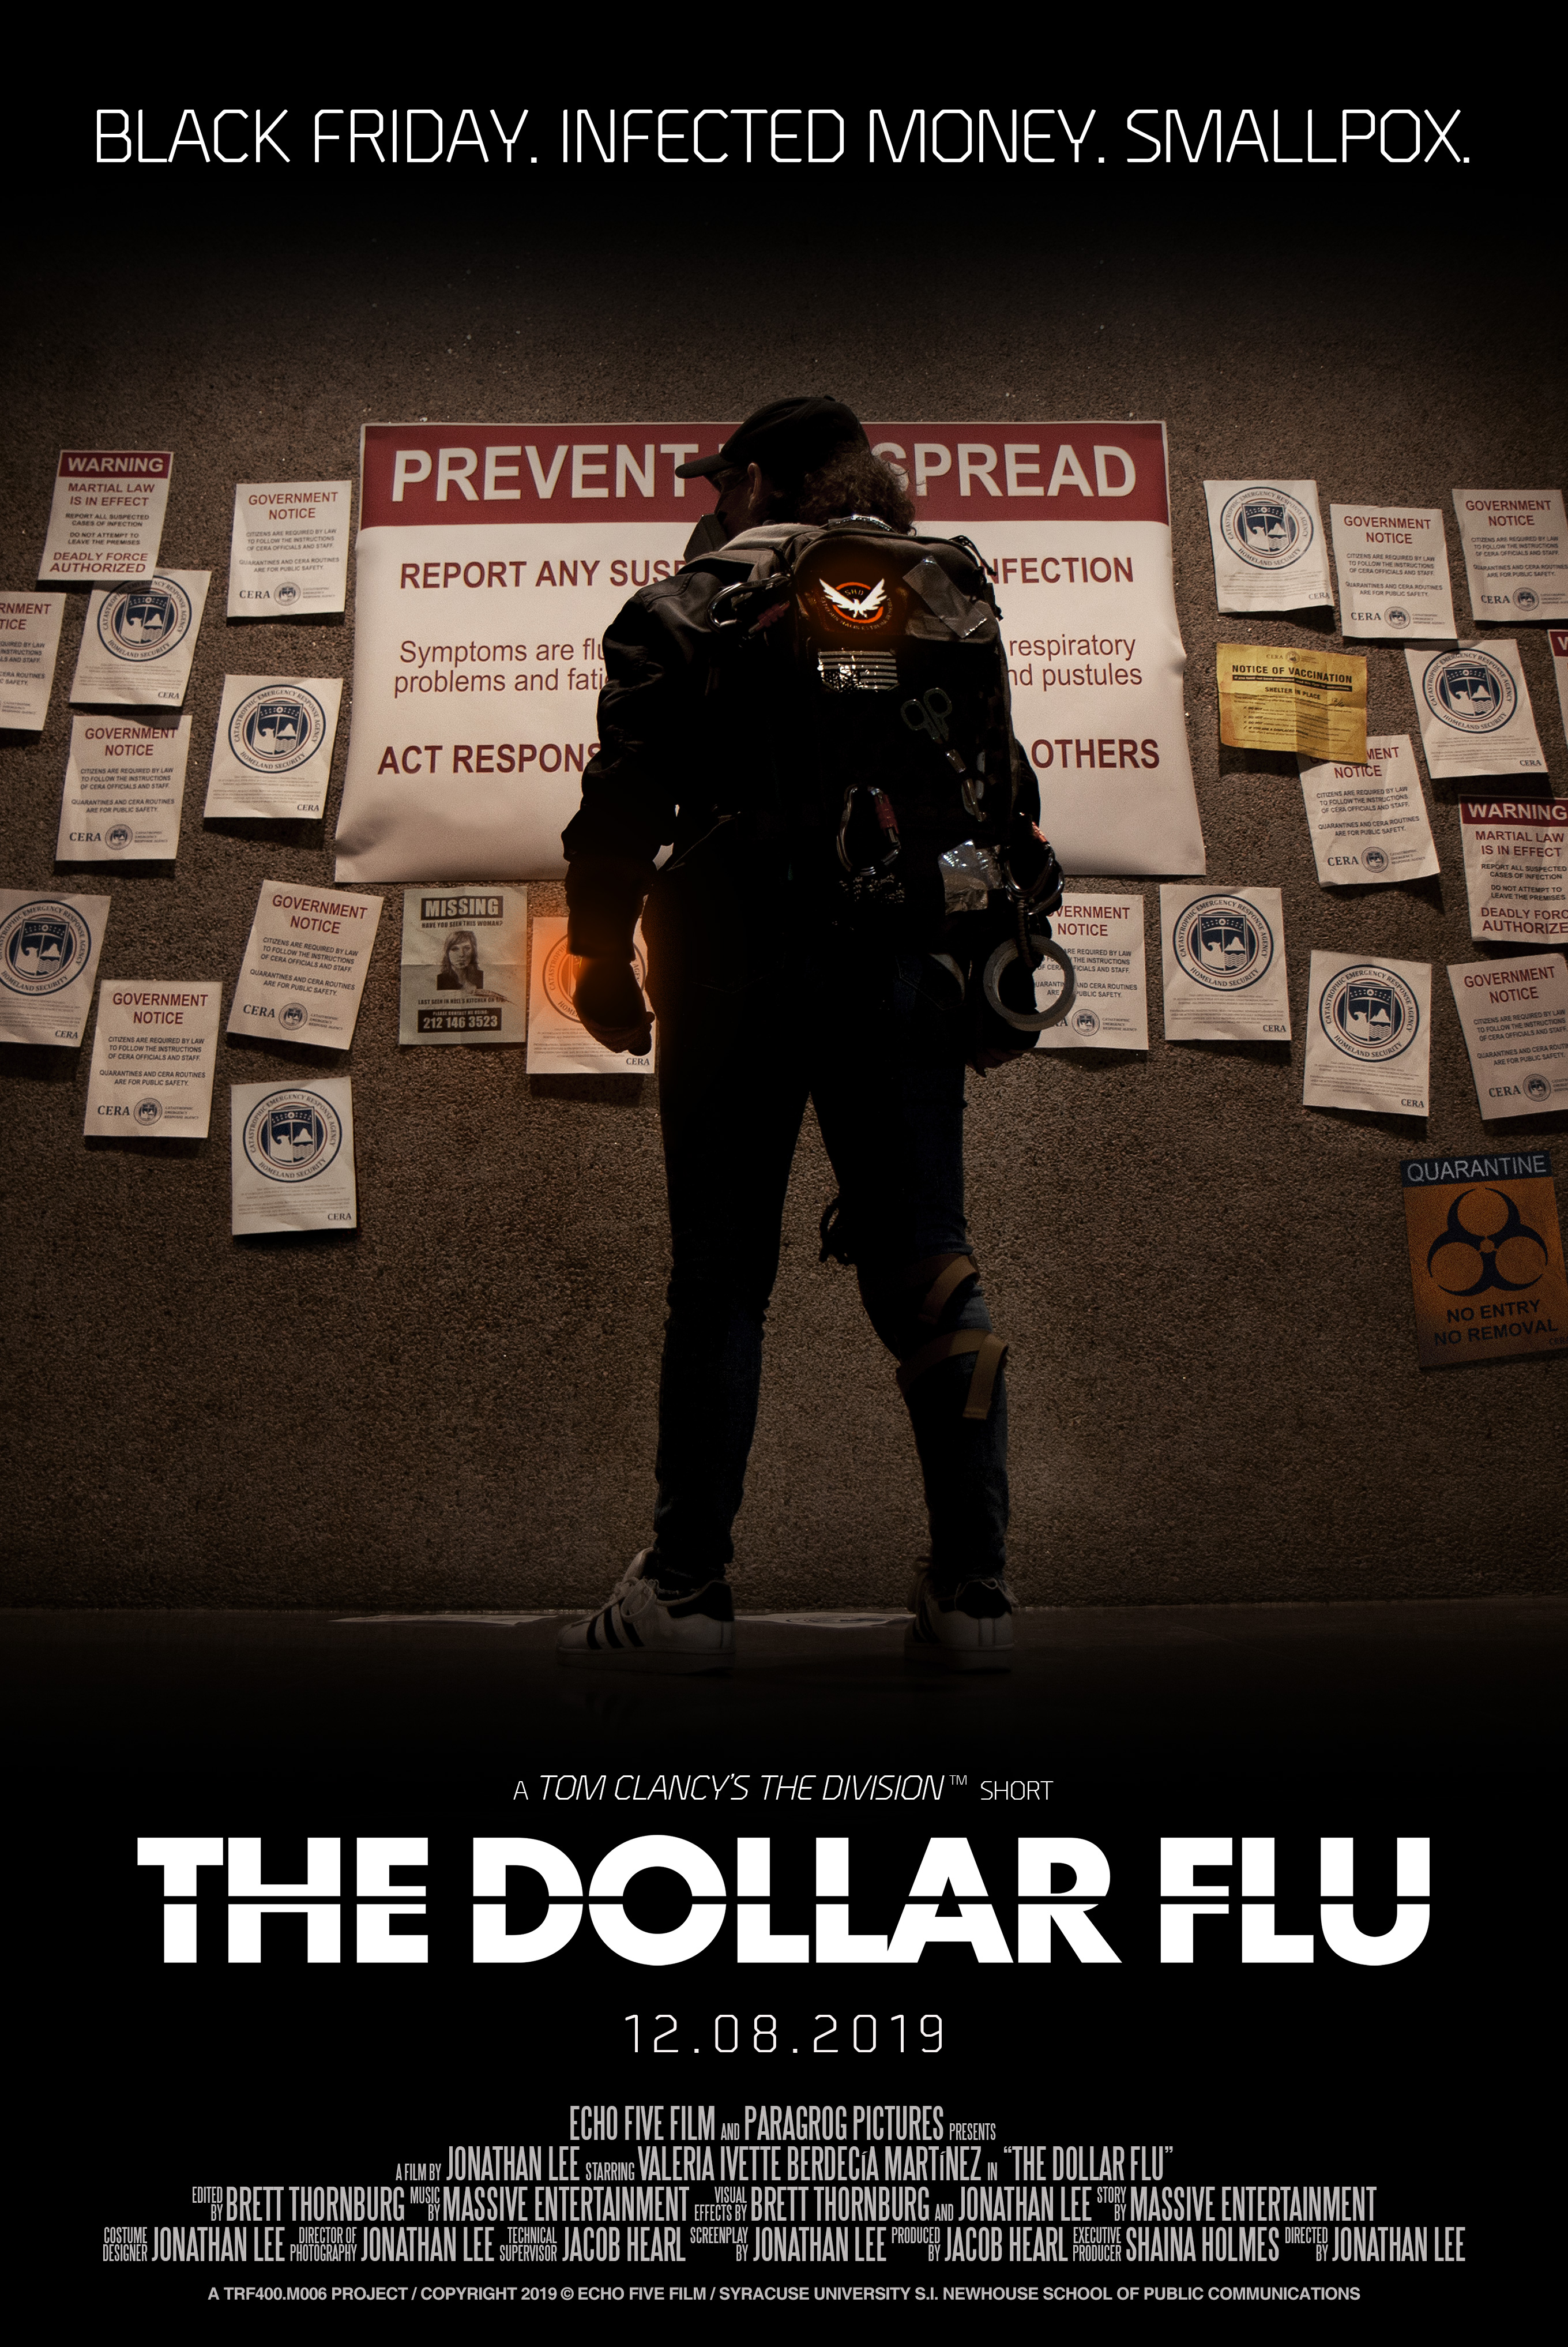 The Dollar Flu